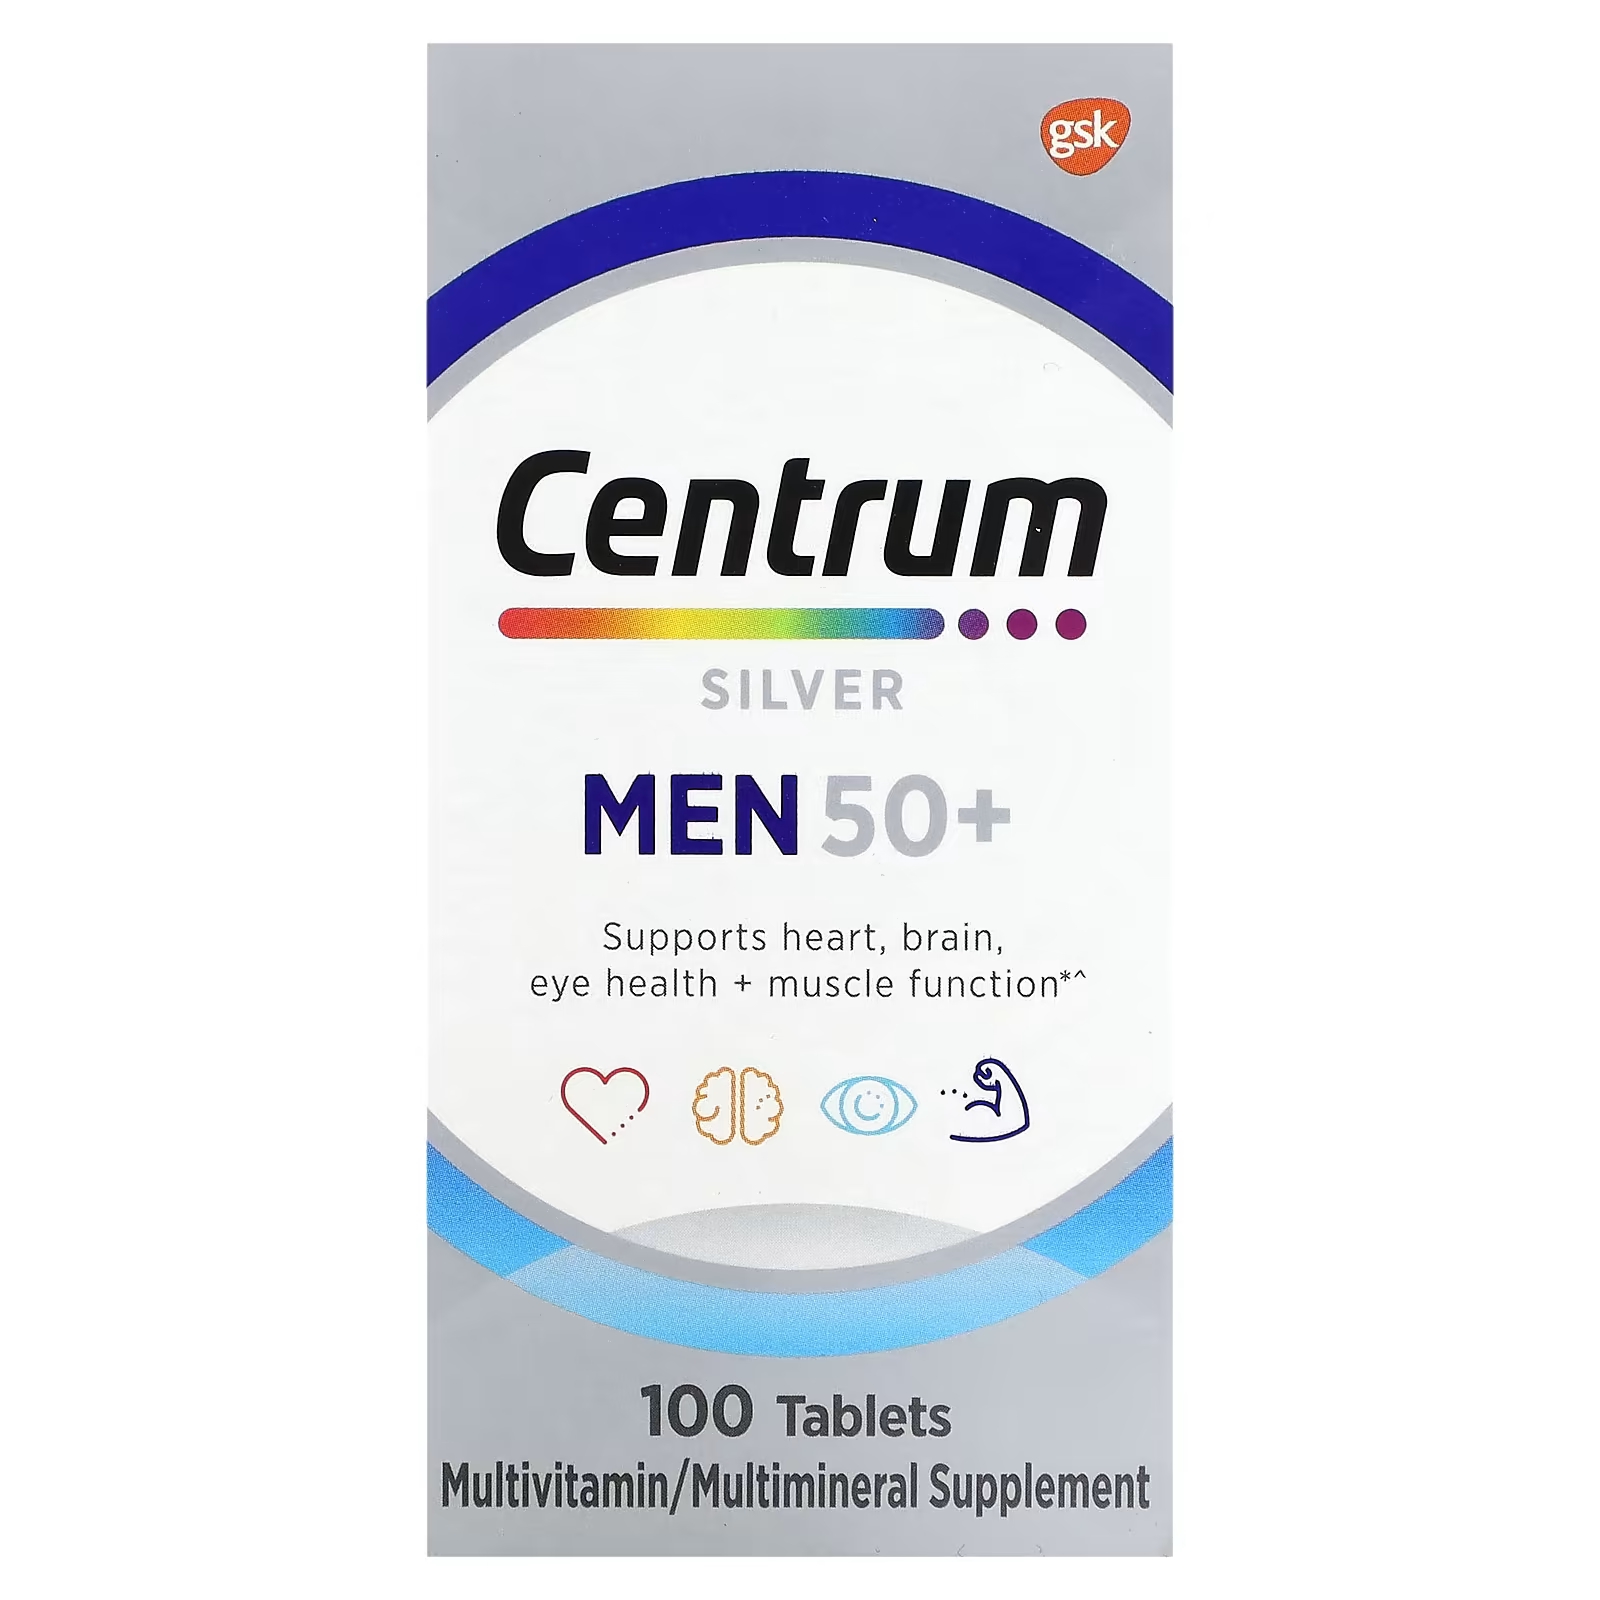 Мультивитаминная добавка Centrum Silver для мужчин 50+, 100 таблеток витаминная добавка centrum silver 50 30 таблеток unbranded